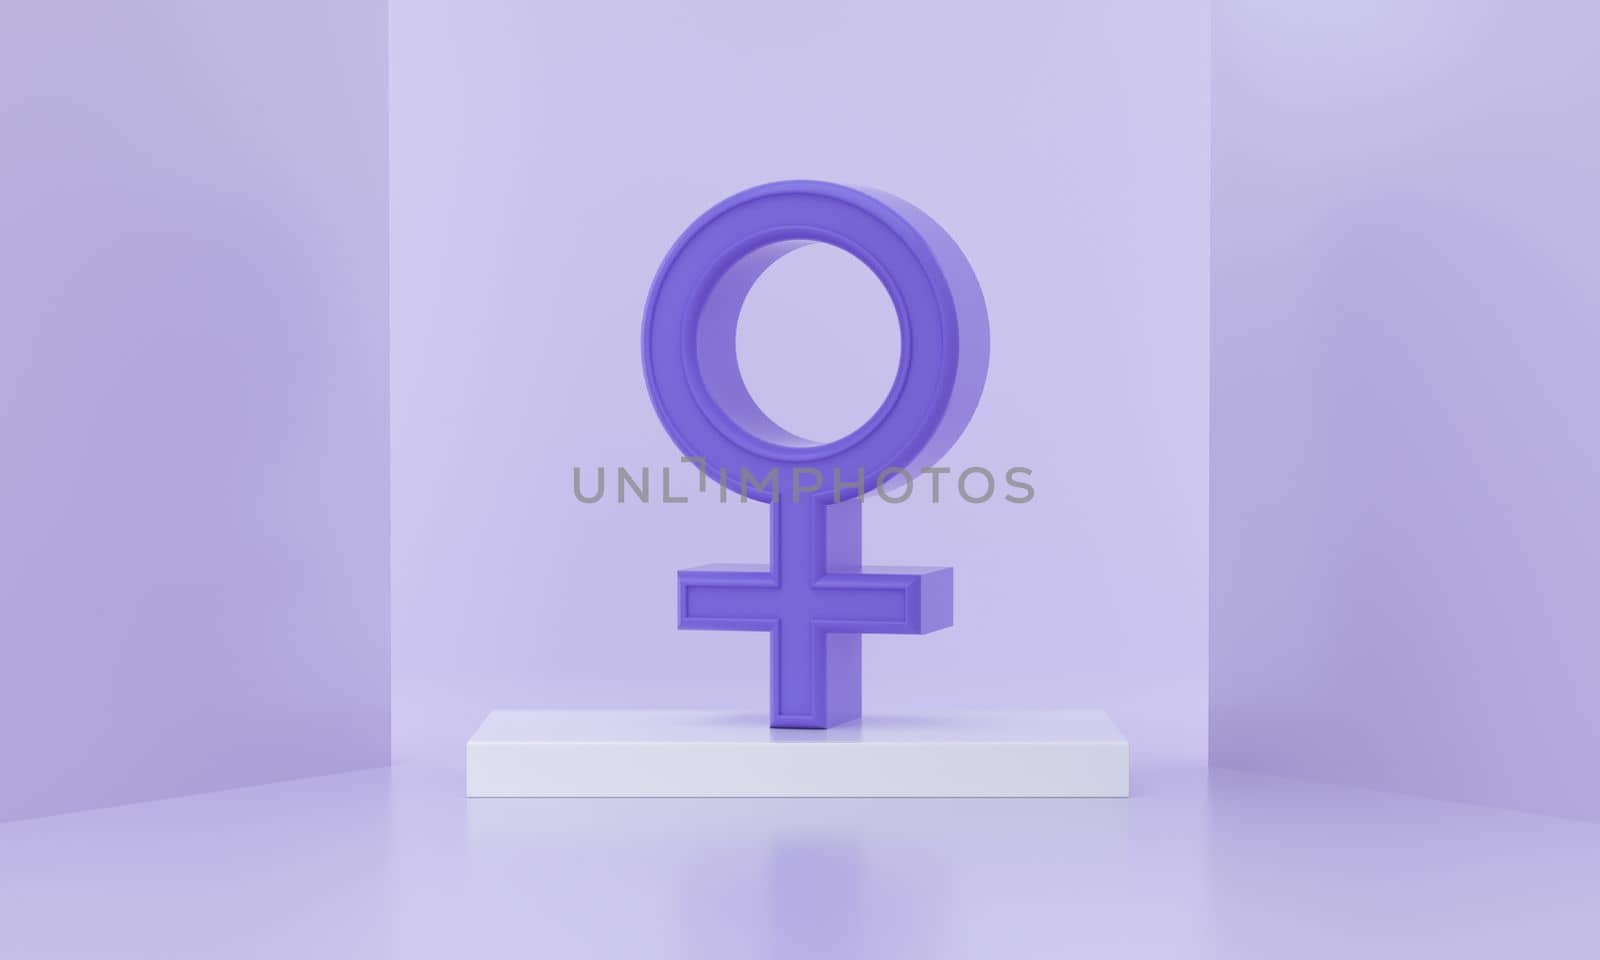 Venus or Female gender symbols on a podium and windows light purple background. 3D rendering.